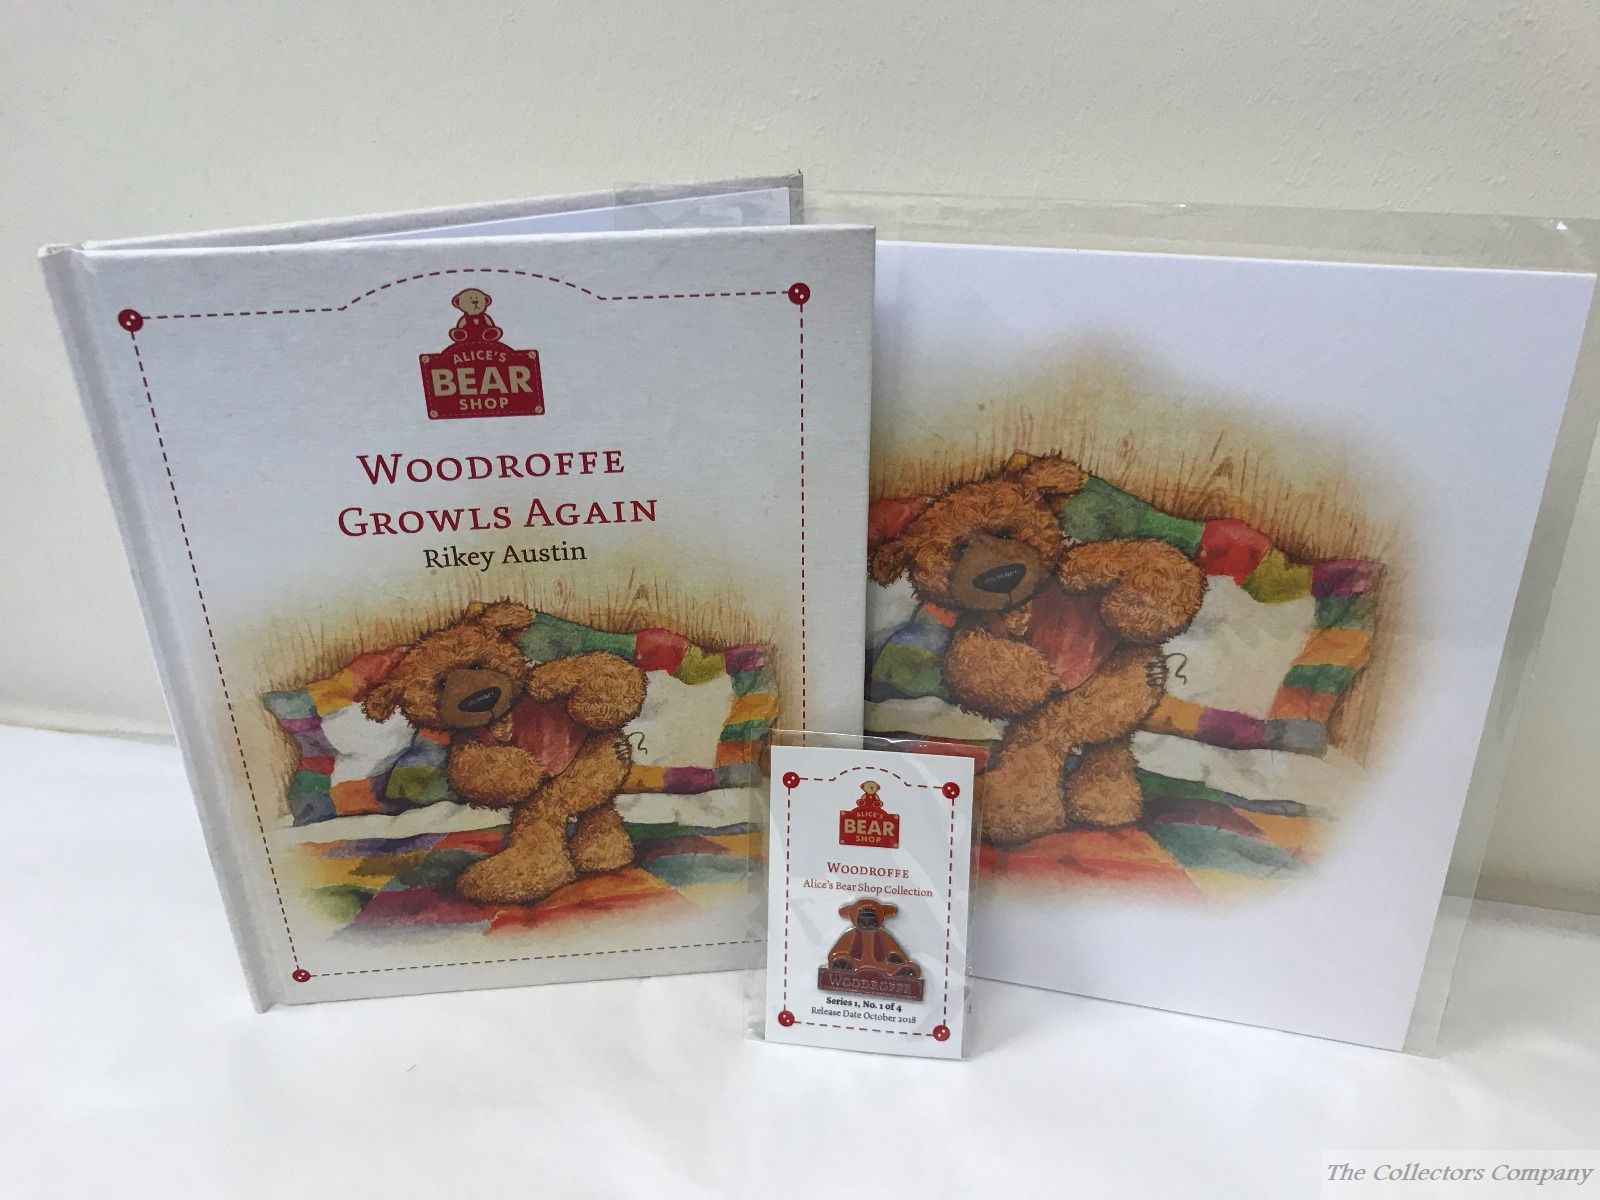 Alice's Bear Shop: Woodroffe Growls Again storybook, Art print and lapel badge